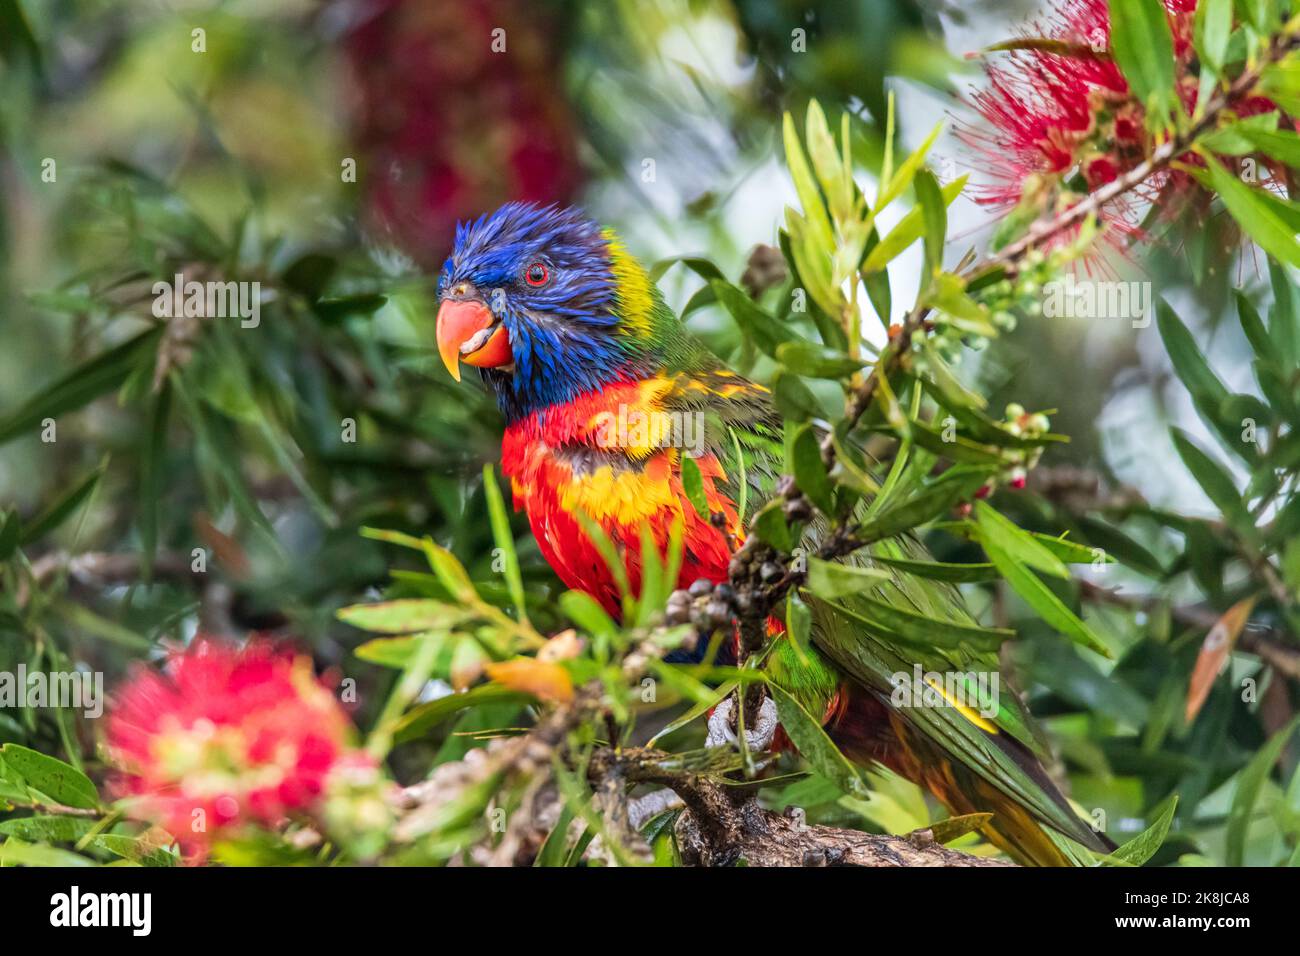 Rainbow Lorikeet enjoying the nectar of the Bottle Brush cone flowers in the rain. Taken at Woy Woy, NSW, Australia. Stock Photo